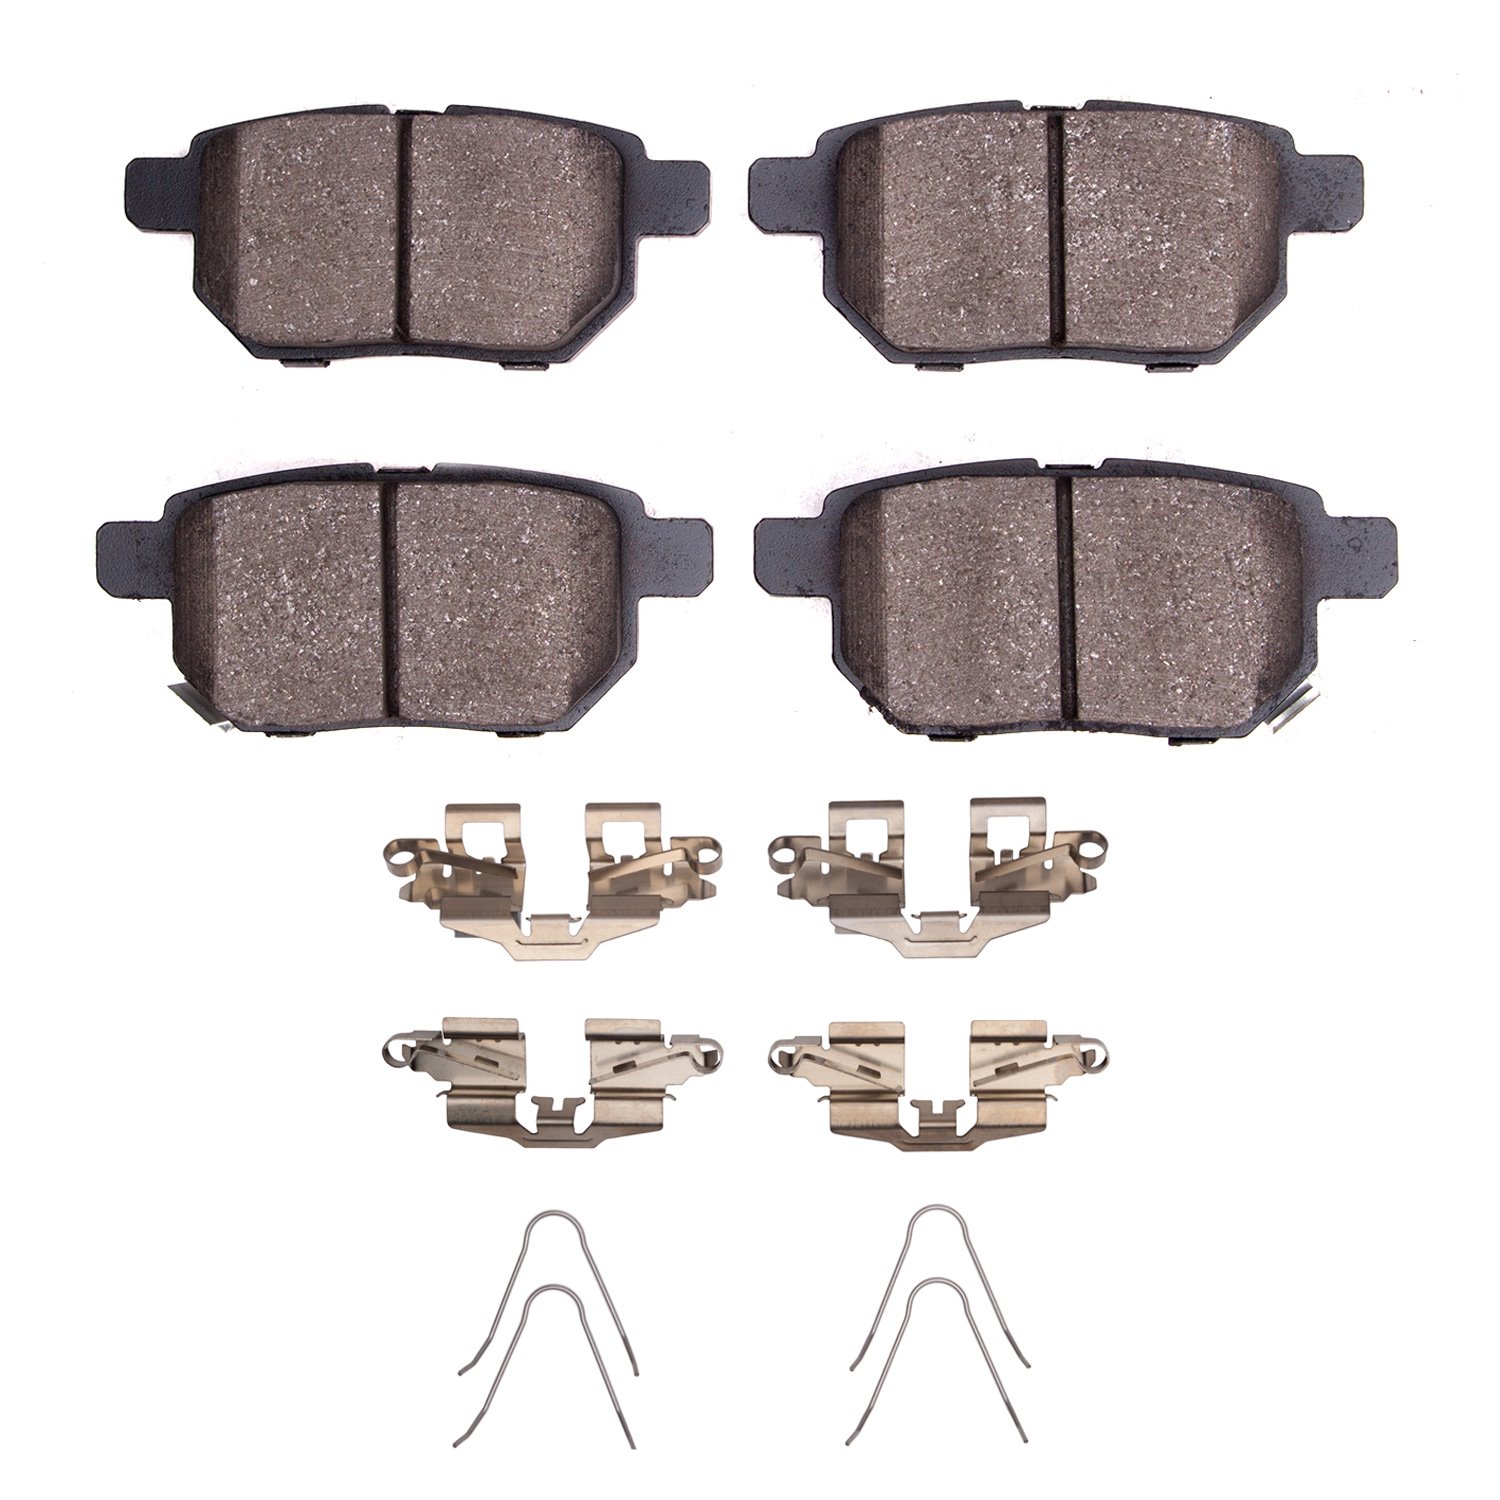 Semi-Metallic Brake Pads & Hardware Kit, Fits Select Fits Multiple Makes/Models, Position: Rear